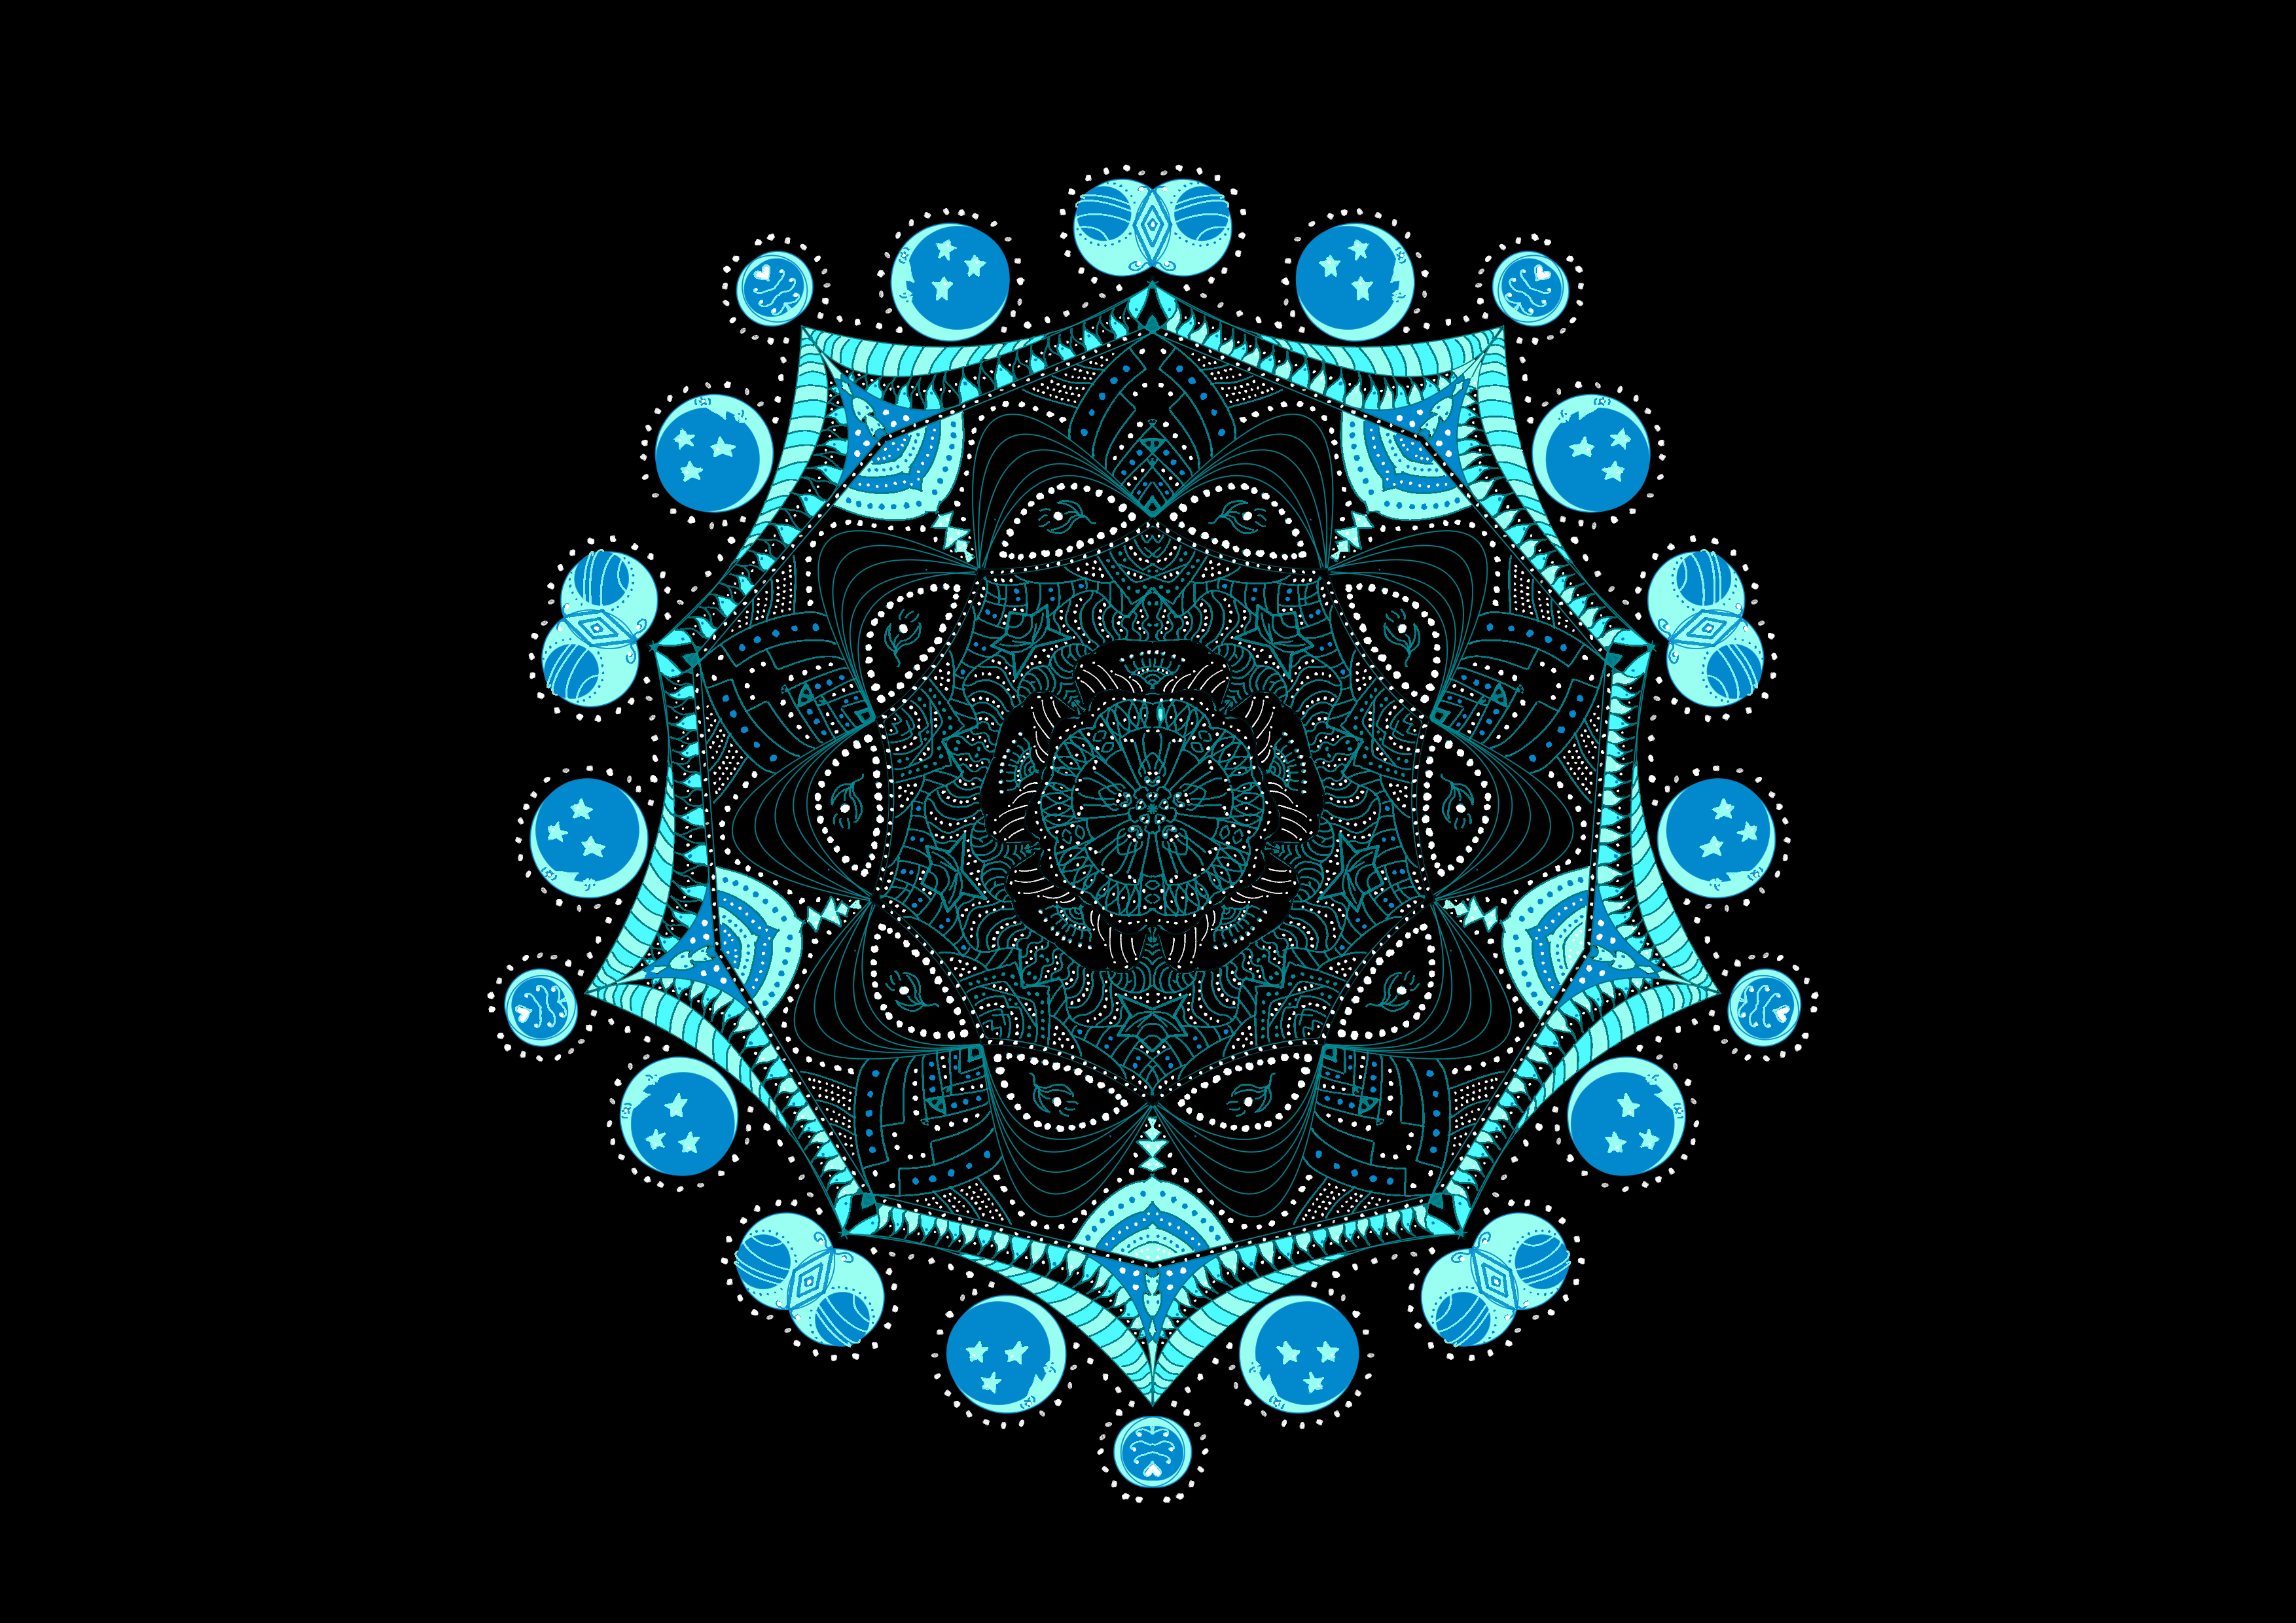 Cosmic Mandala in shades of blue